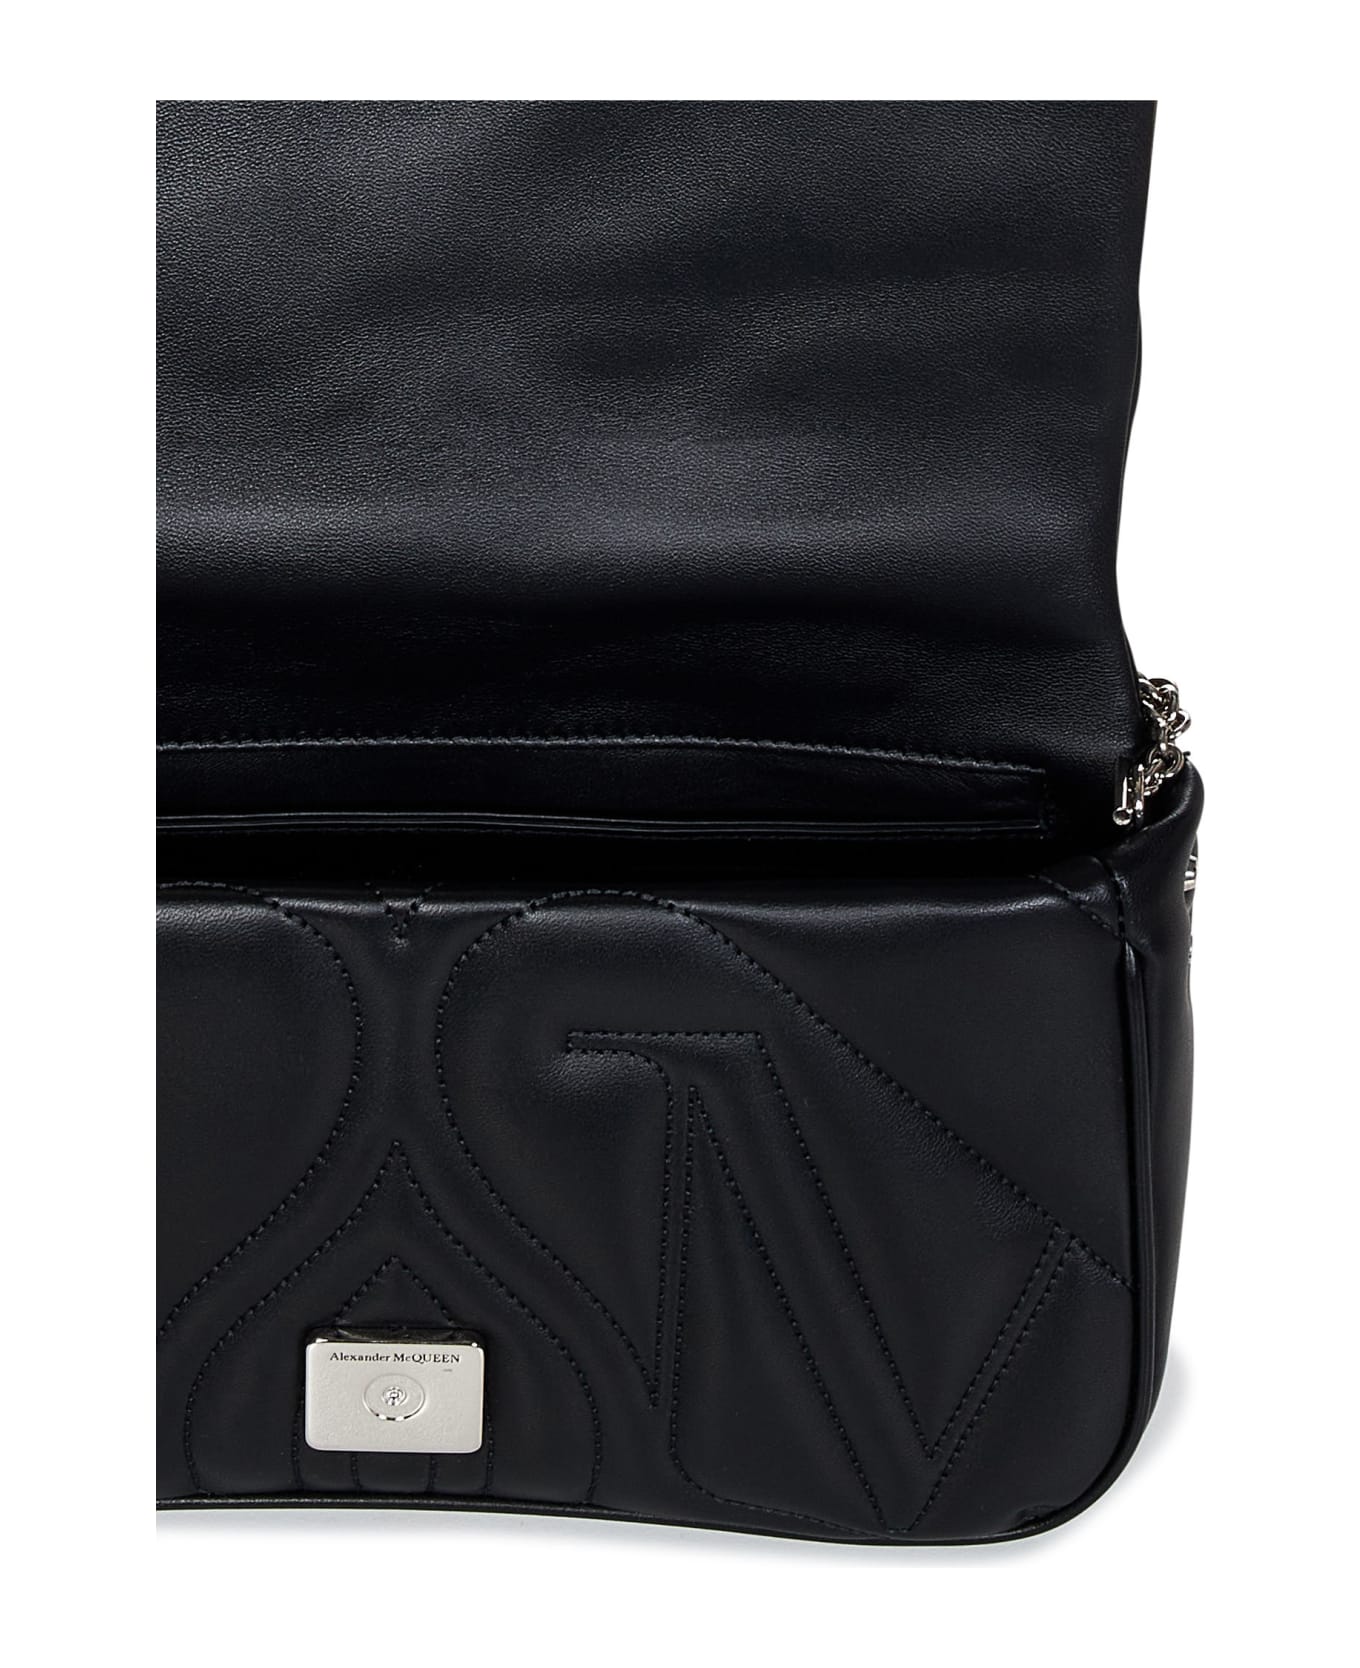 Alexander McQueen Seal Small Shoulder Bag - Black